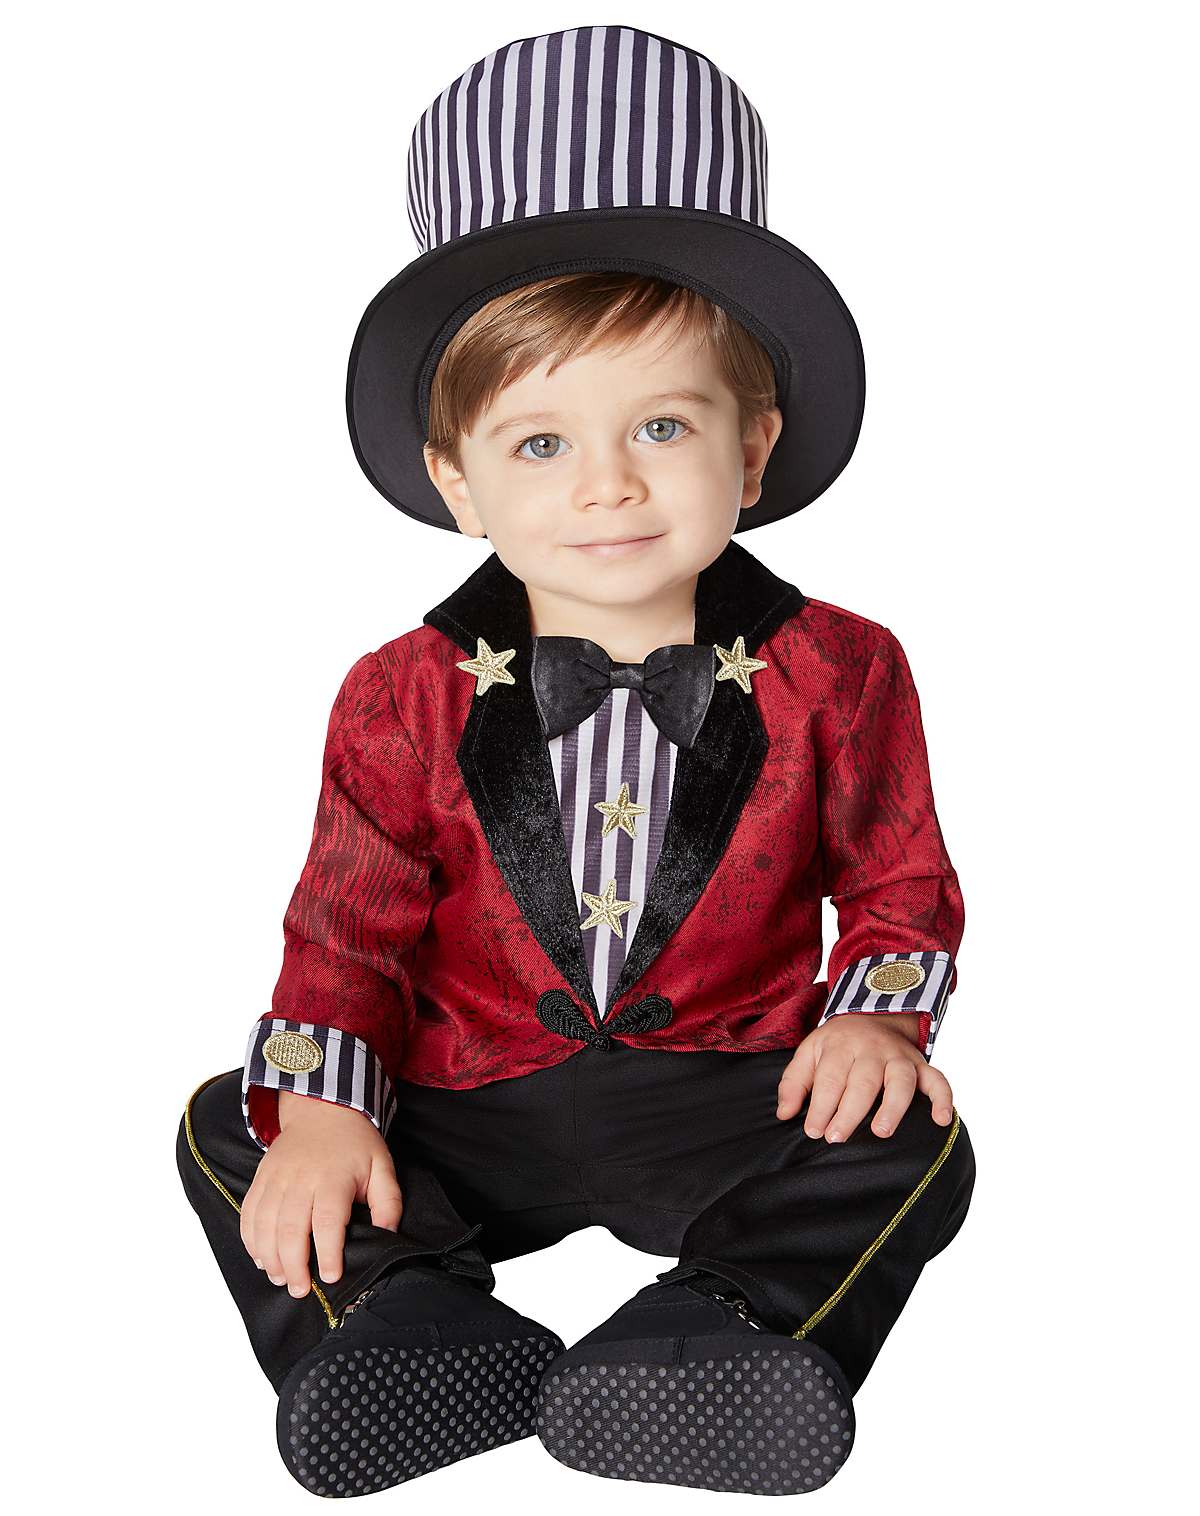 Baby Lil' Ringmaster Costume
